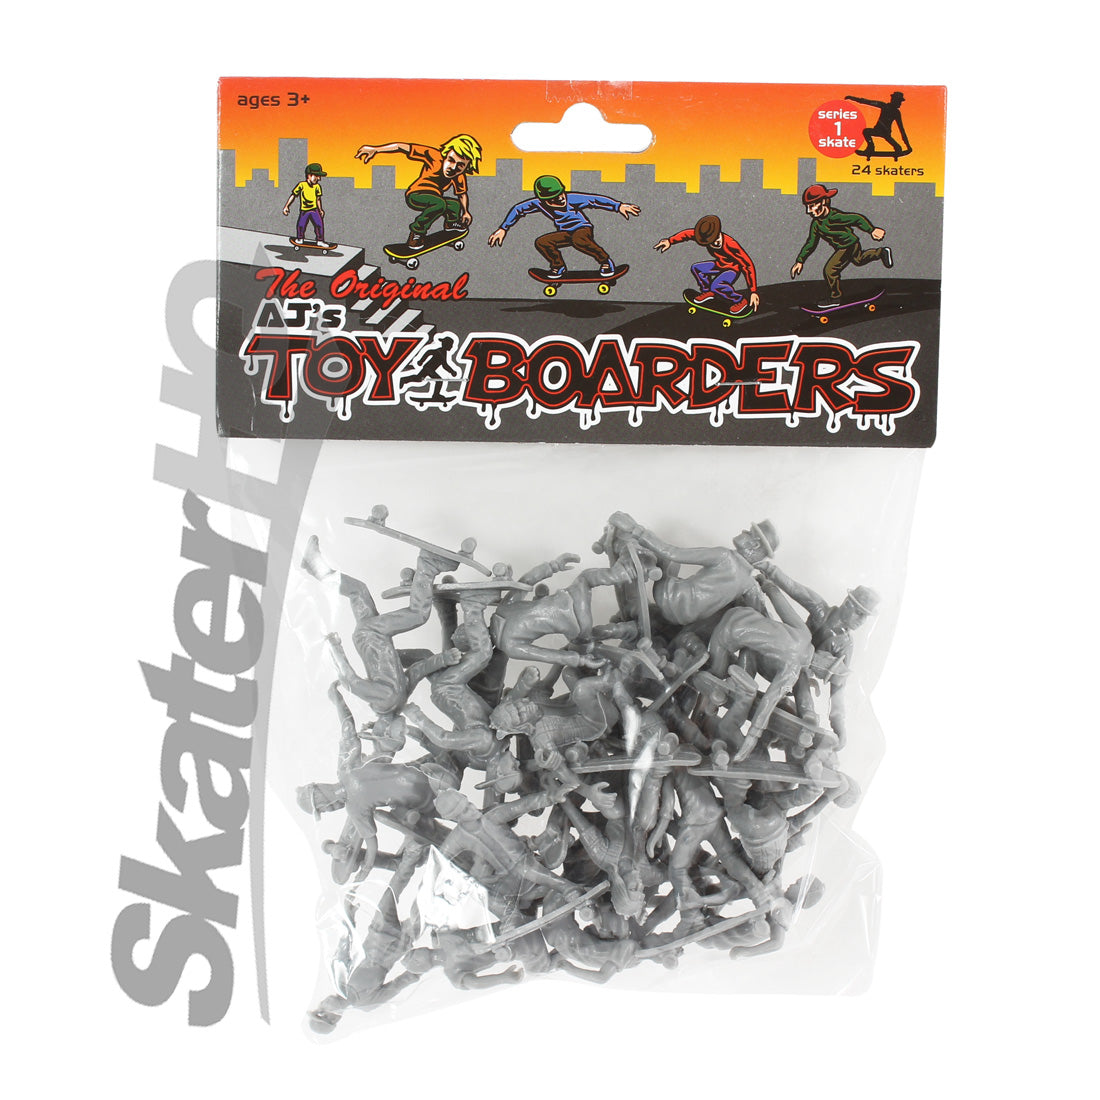 AJs Toy Boarders Skate Series 1 - Grey Skateboard Accessories